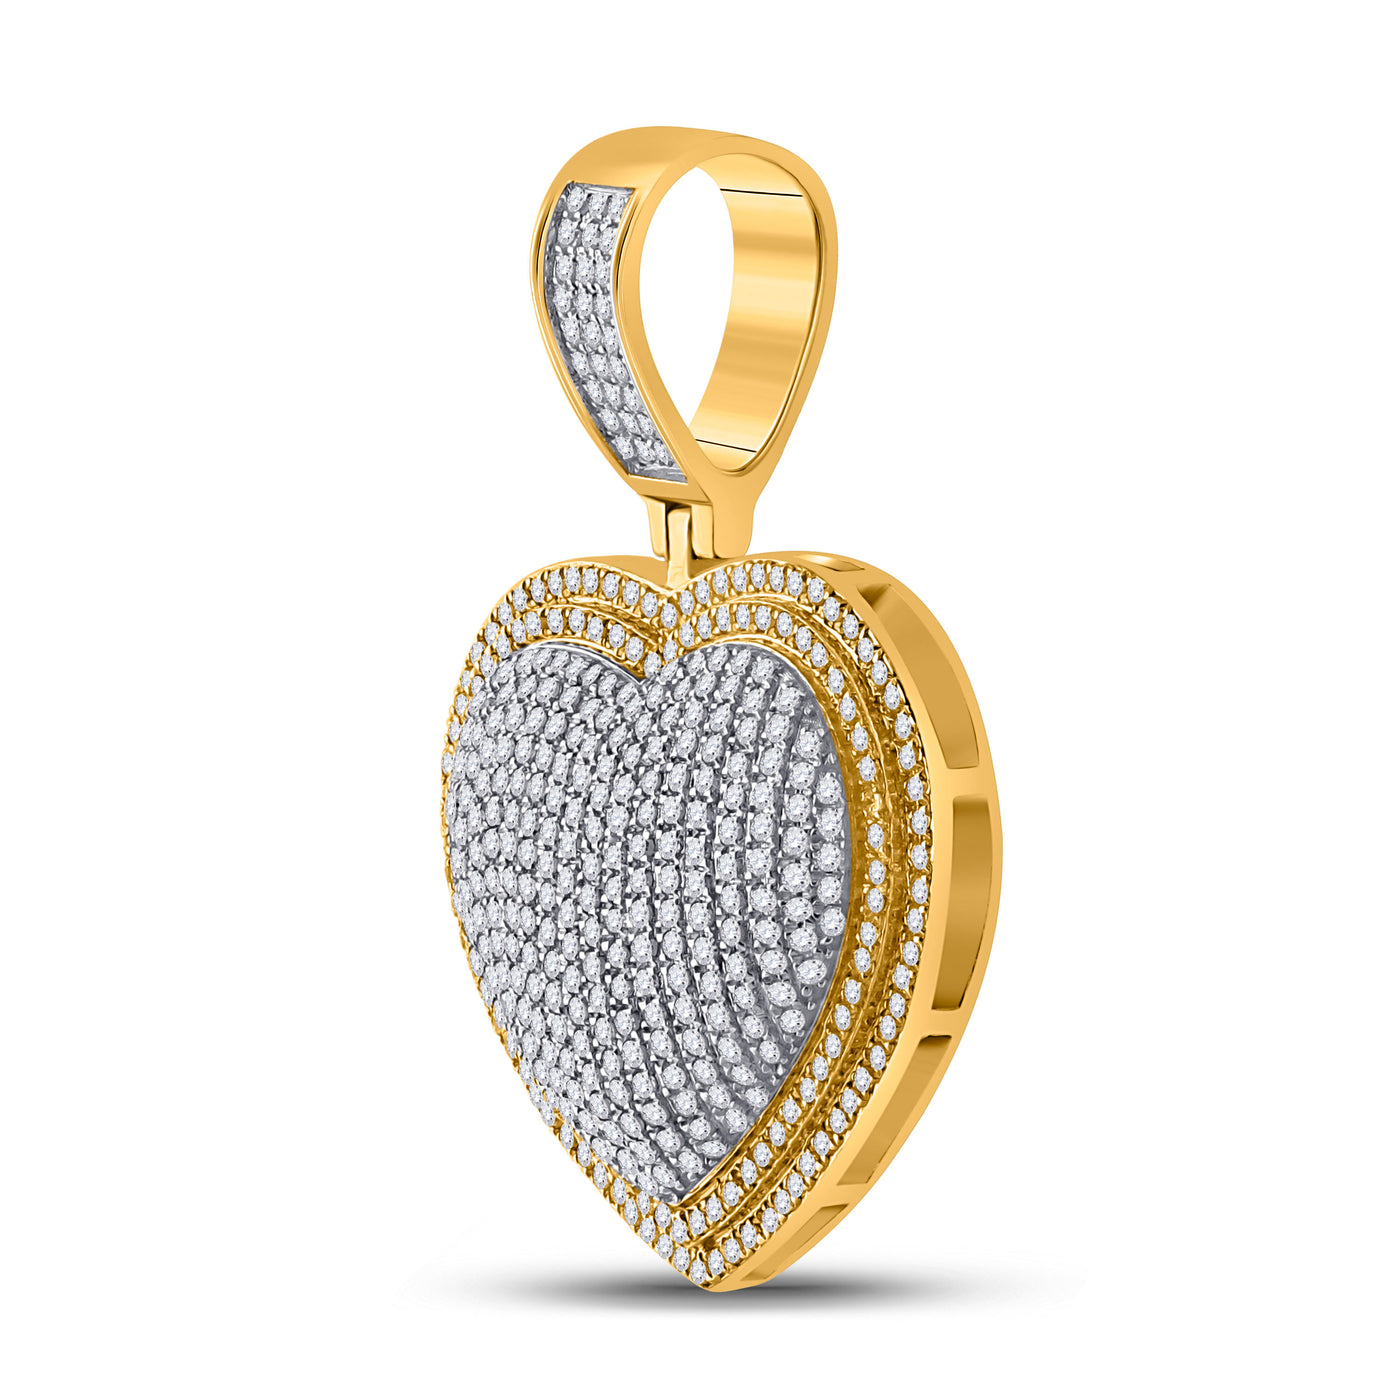 10K YELLOW GOLD ROUND DIAMOND HEART CHARM PENDANT 1-1/4 CTTW